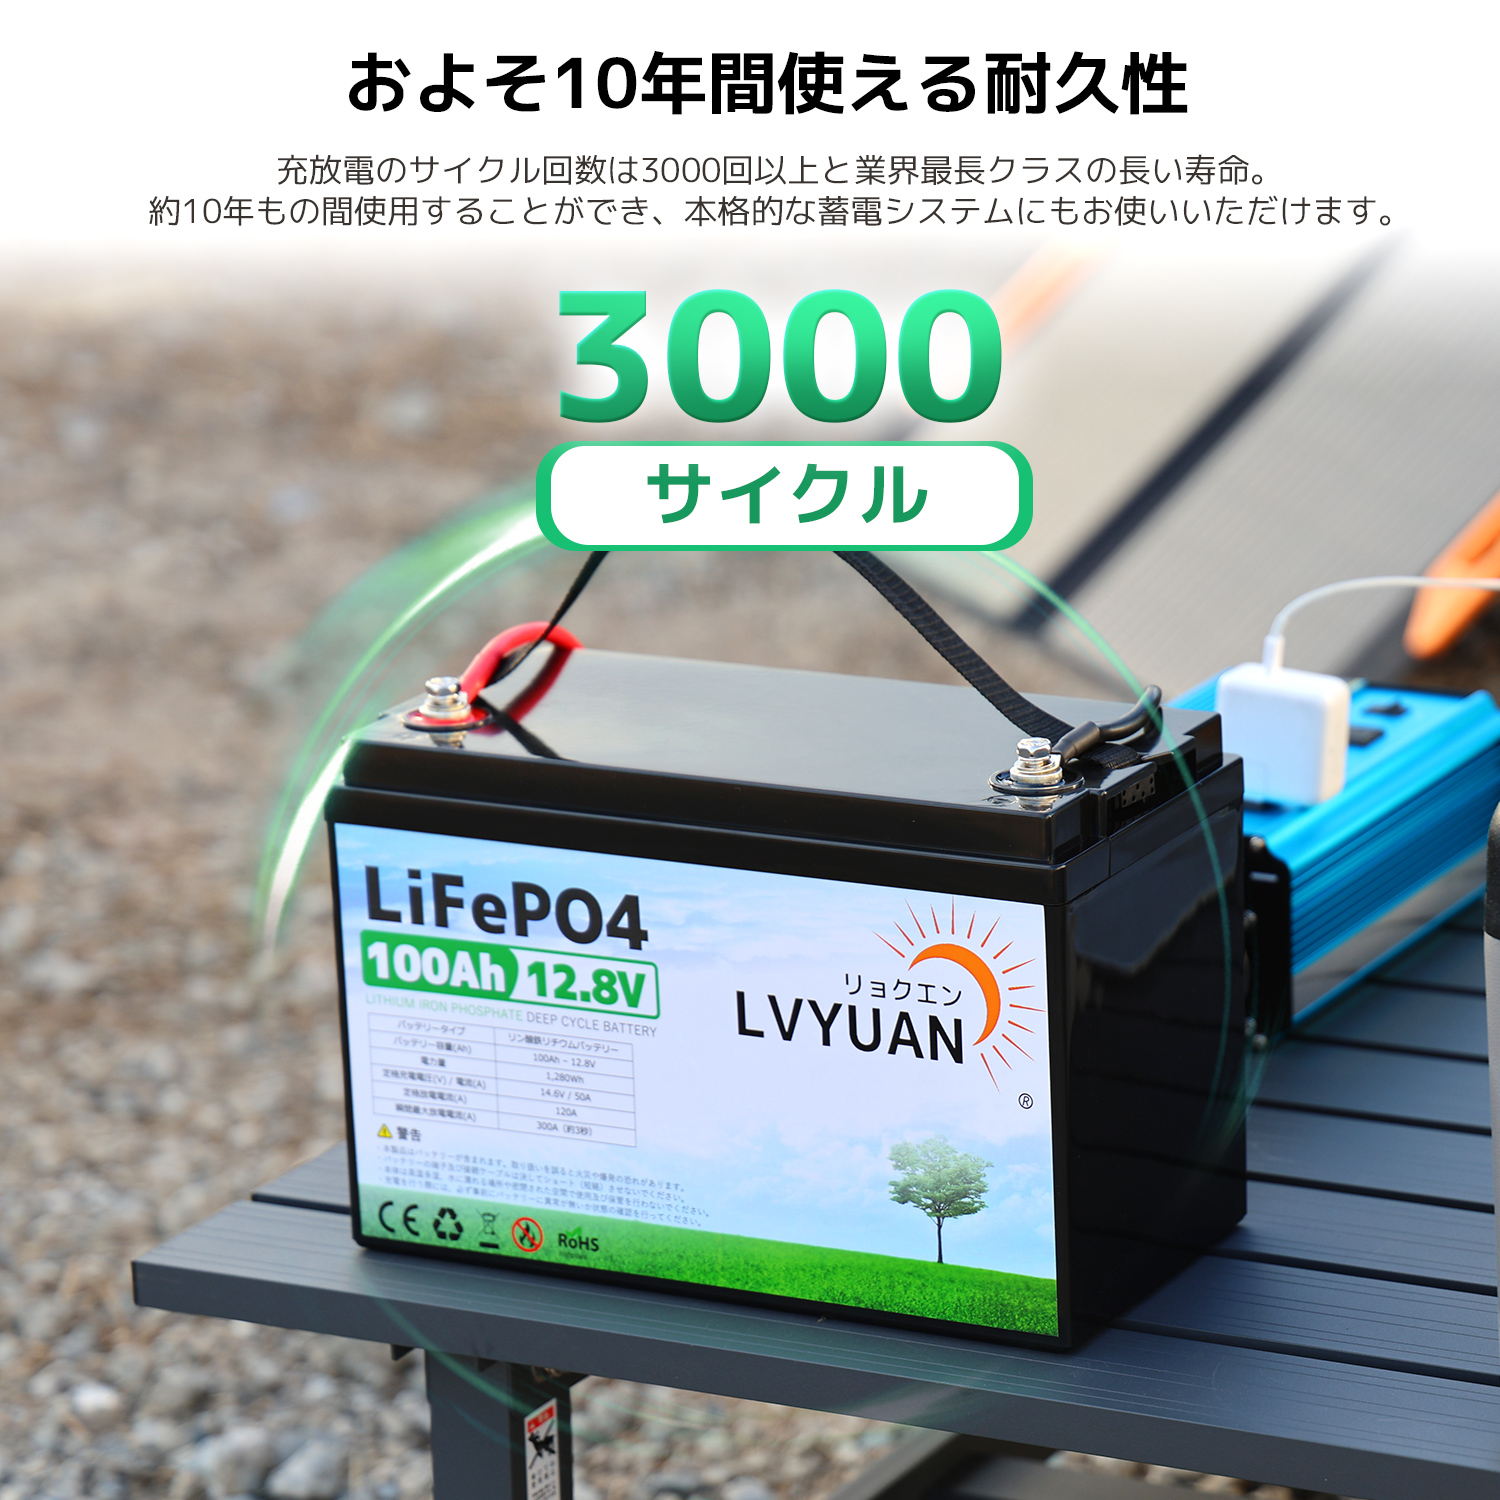 LVYUAN LiFePO4（リン酸鉄リチウム）電池 リチウムイオンバッテリー 